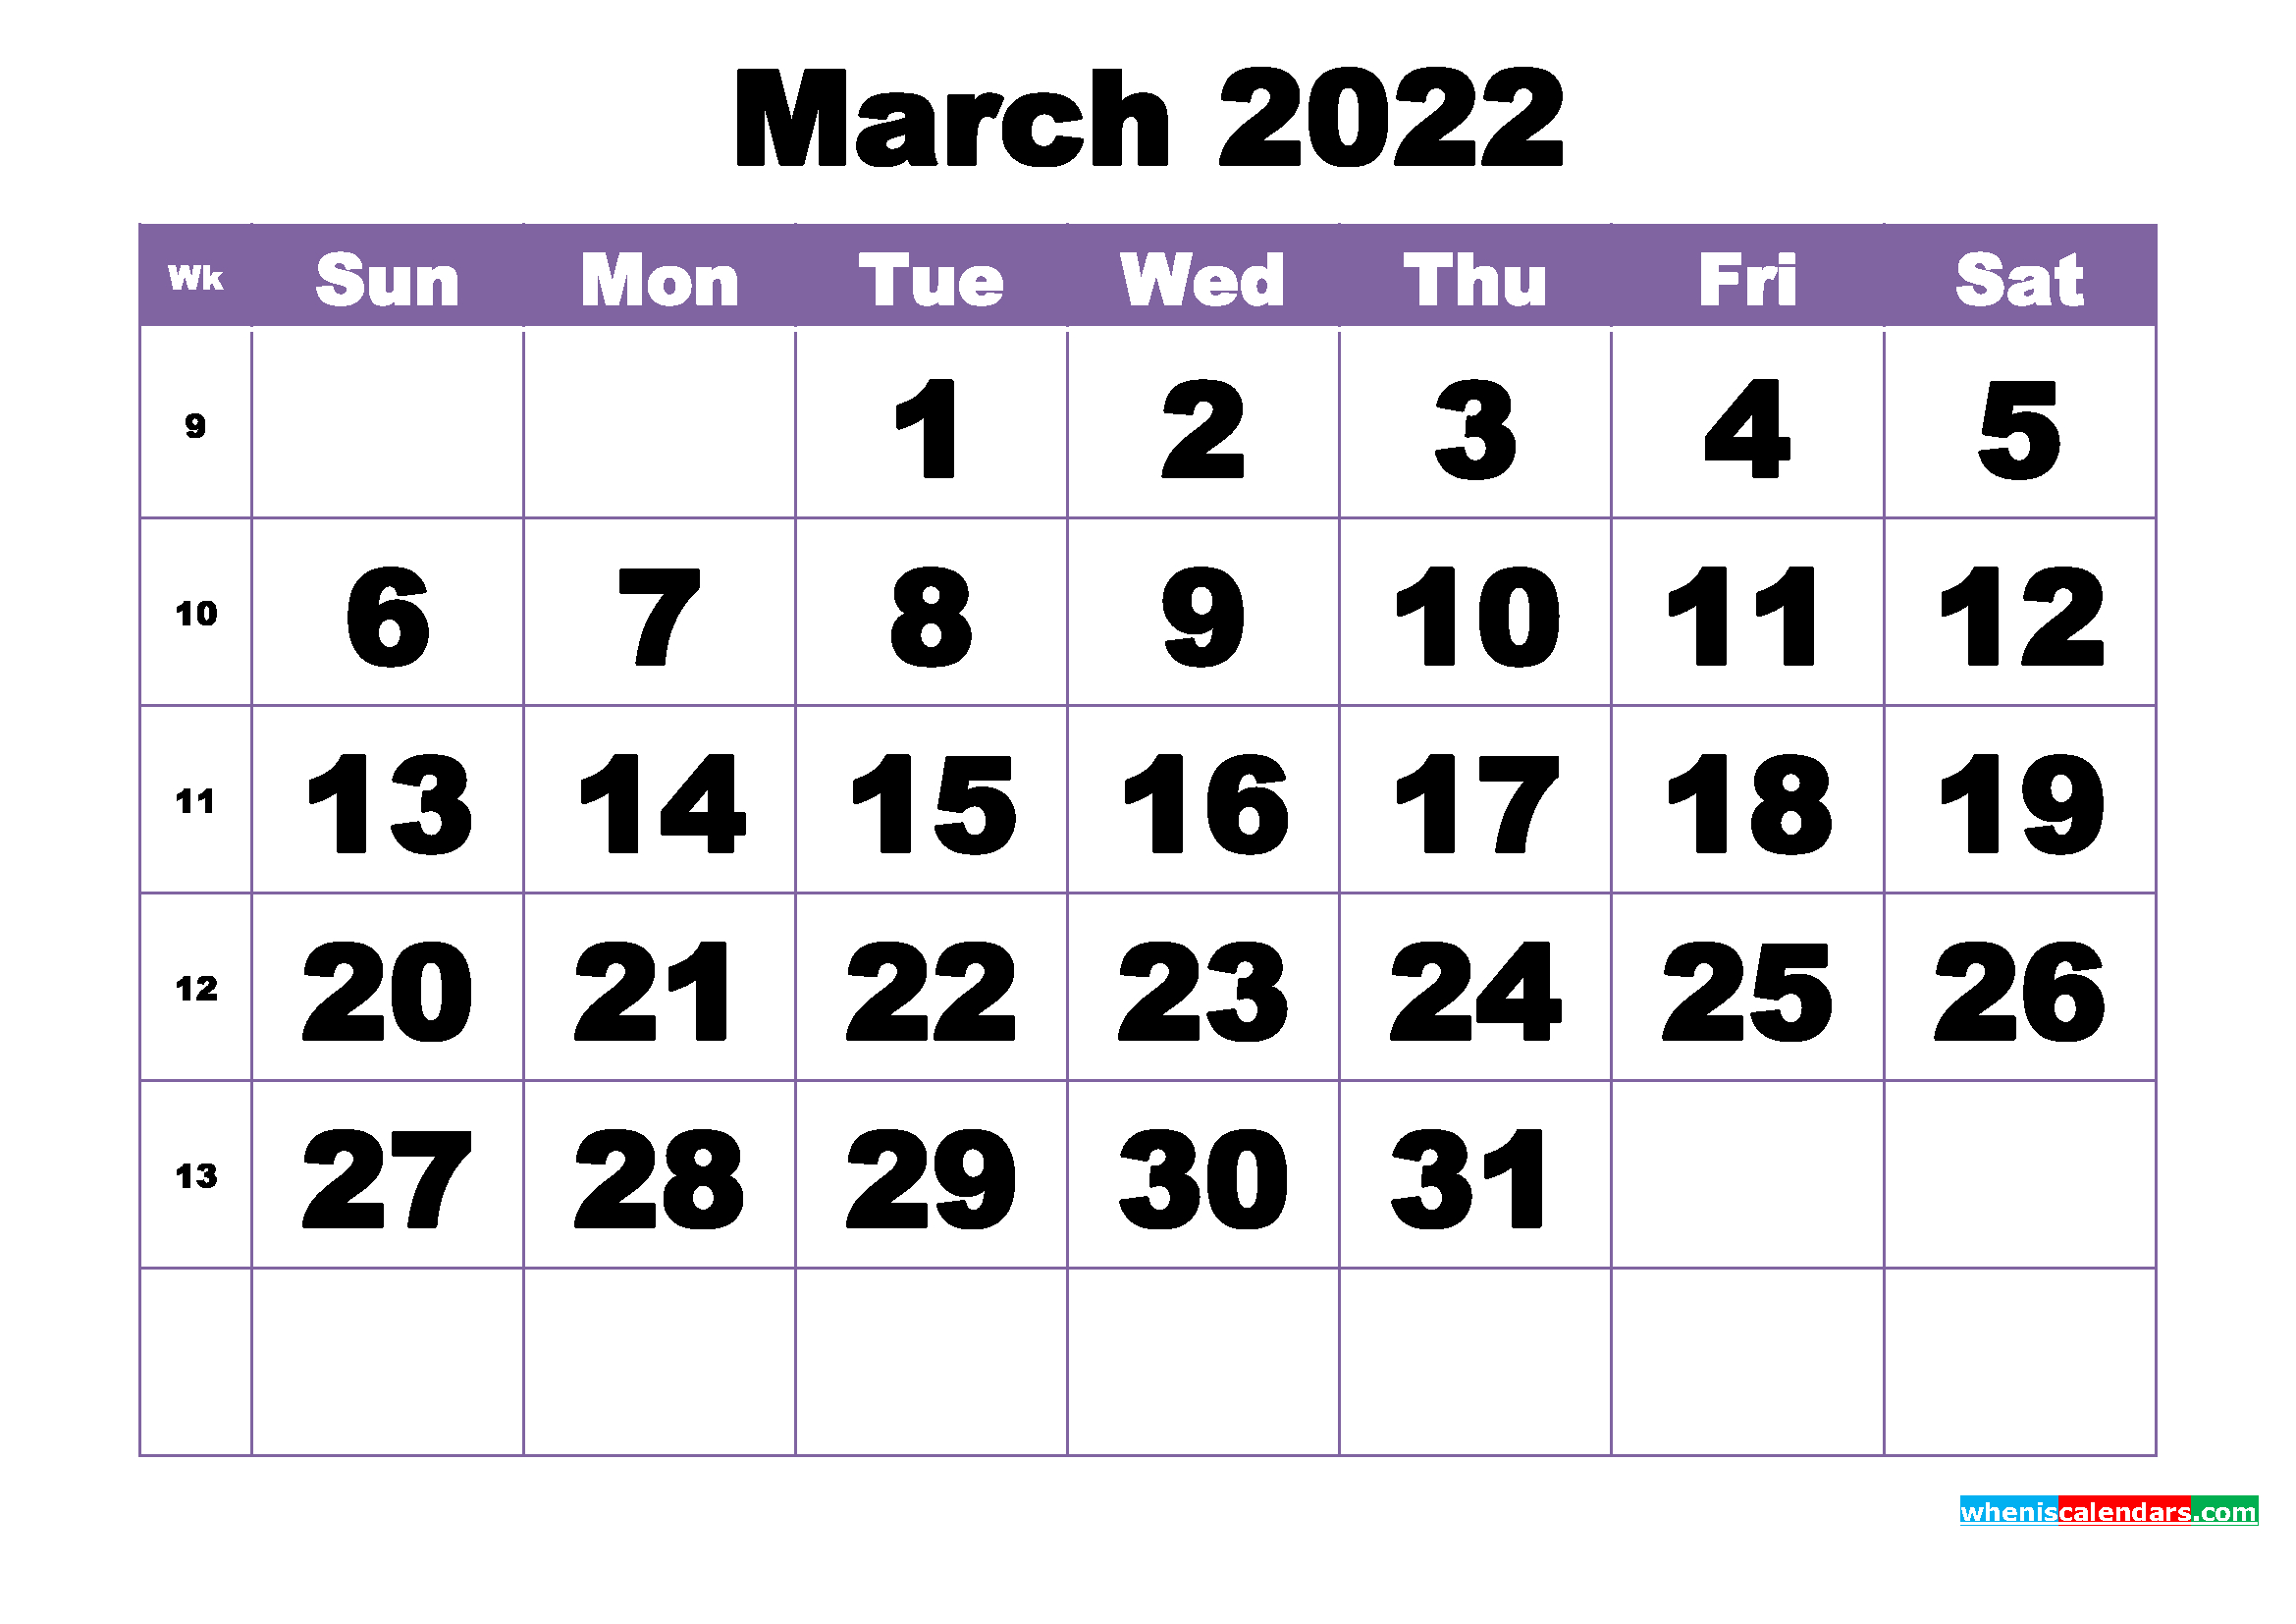 2022 Calendar March - Allcalendar